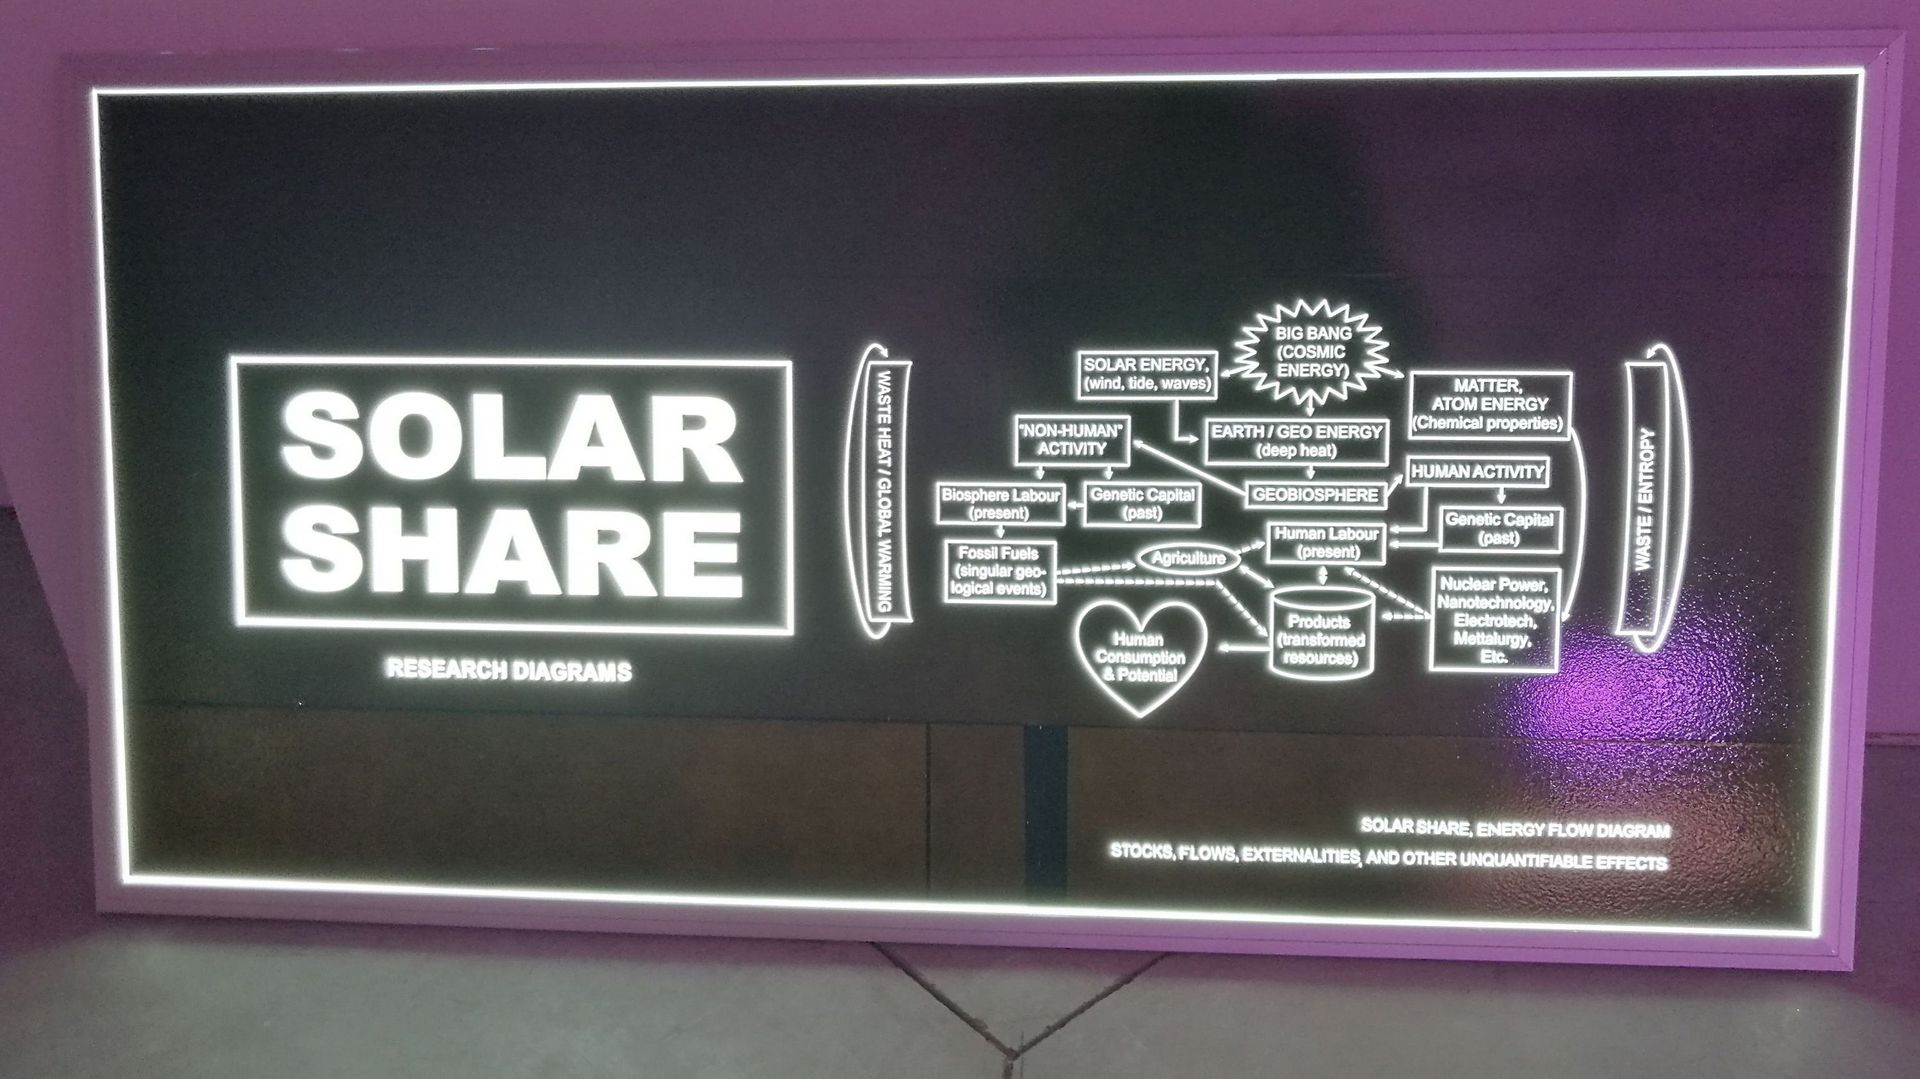 Solar Share - DISNOVATION.ORG, 2020